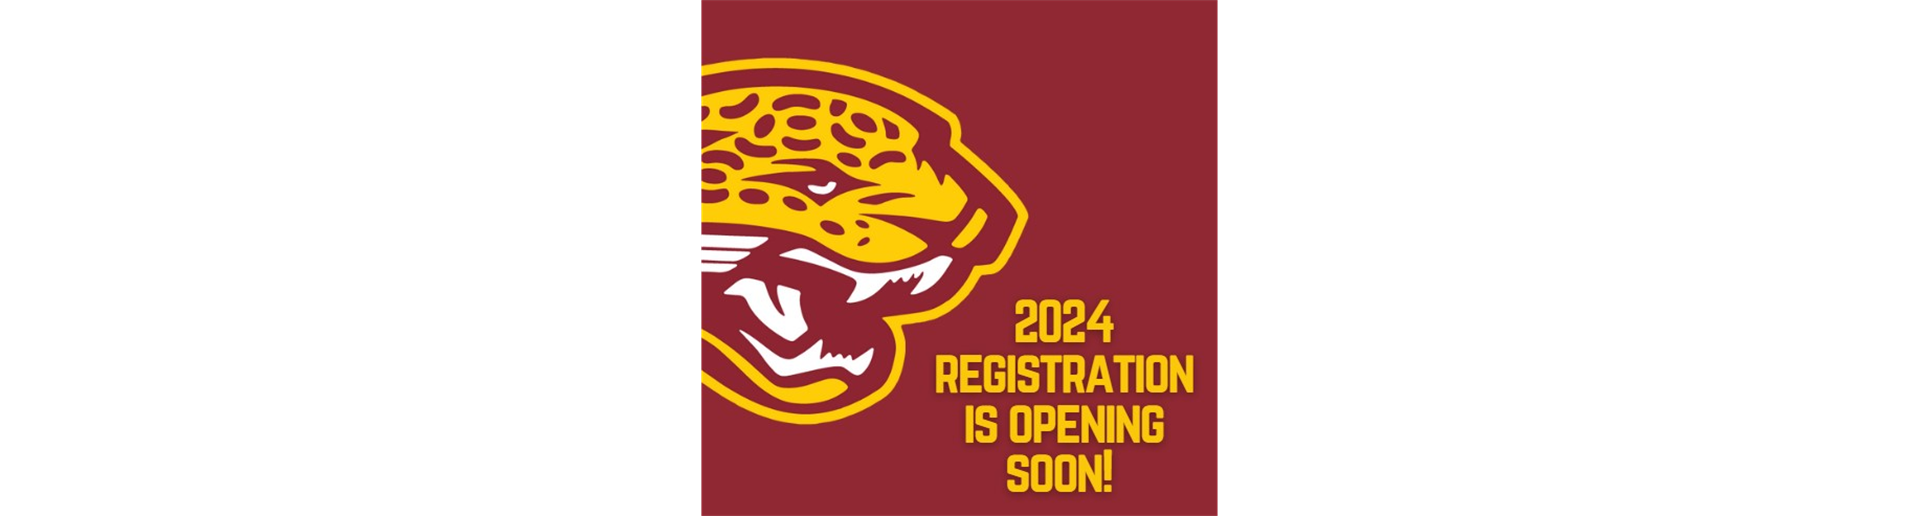 2024 Registration coming soon! 